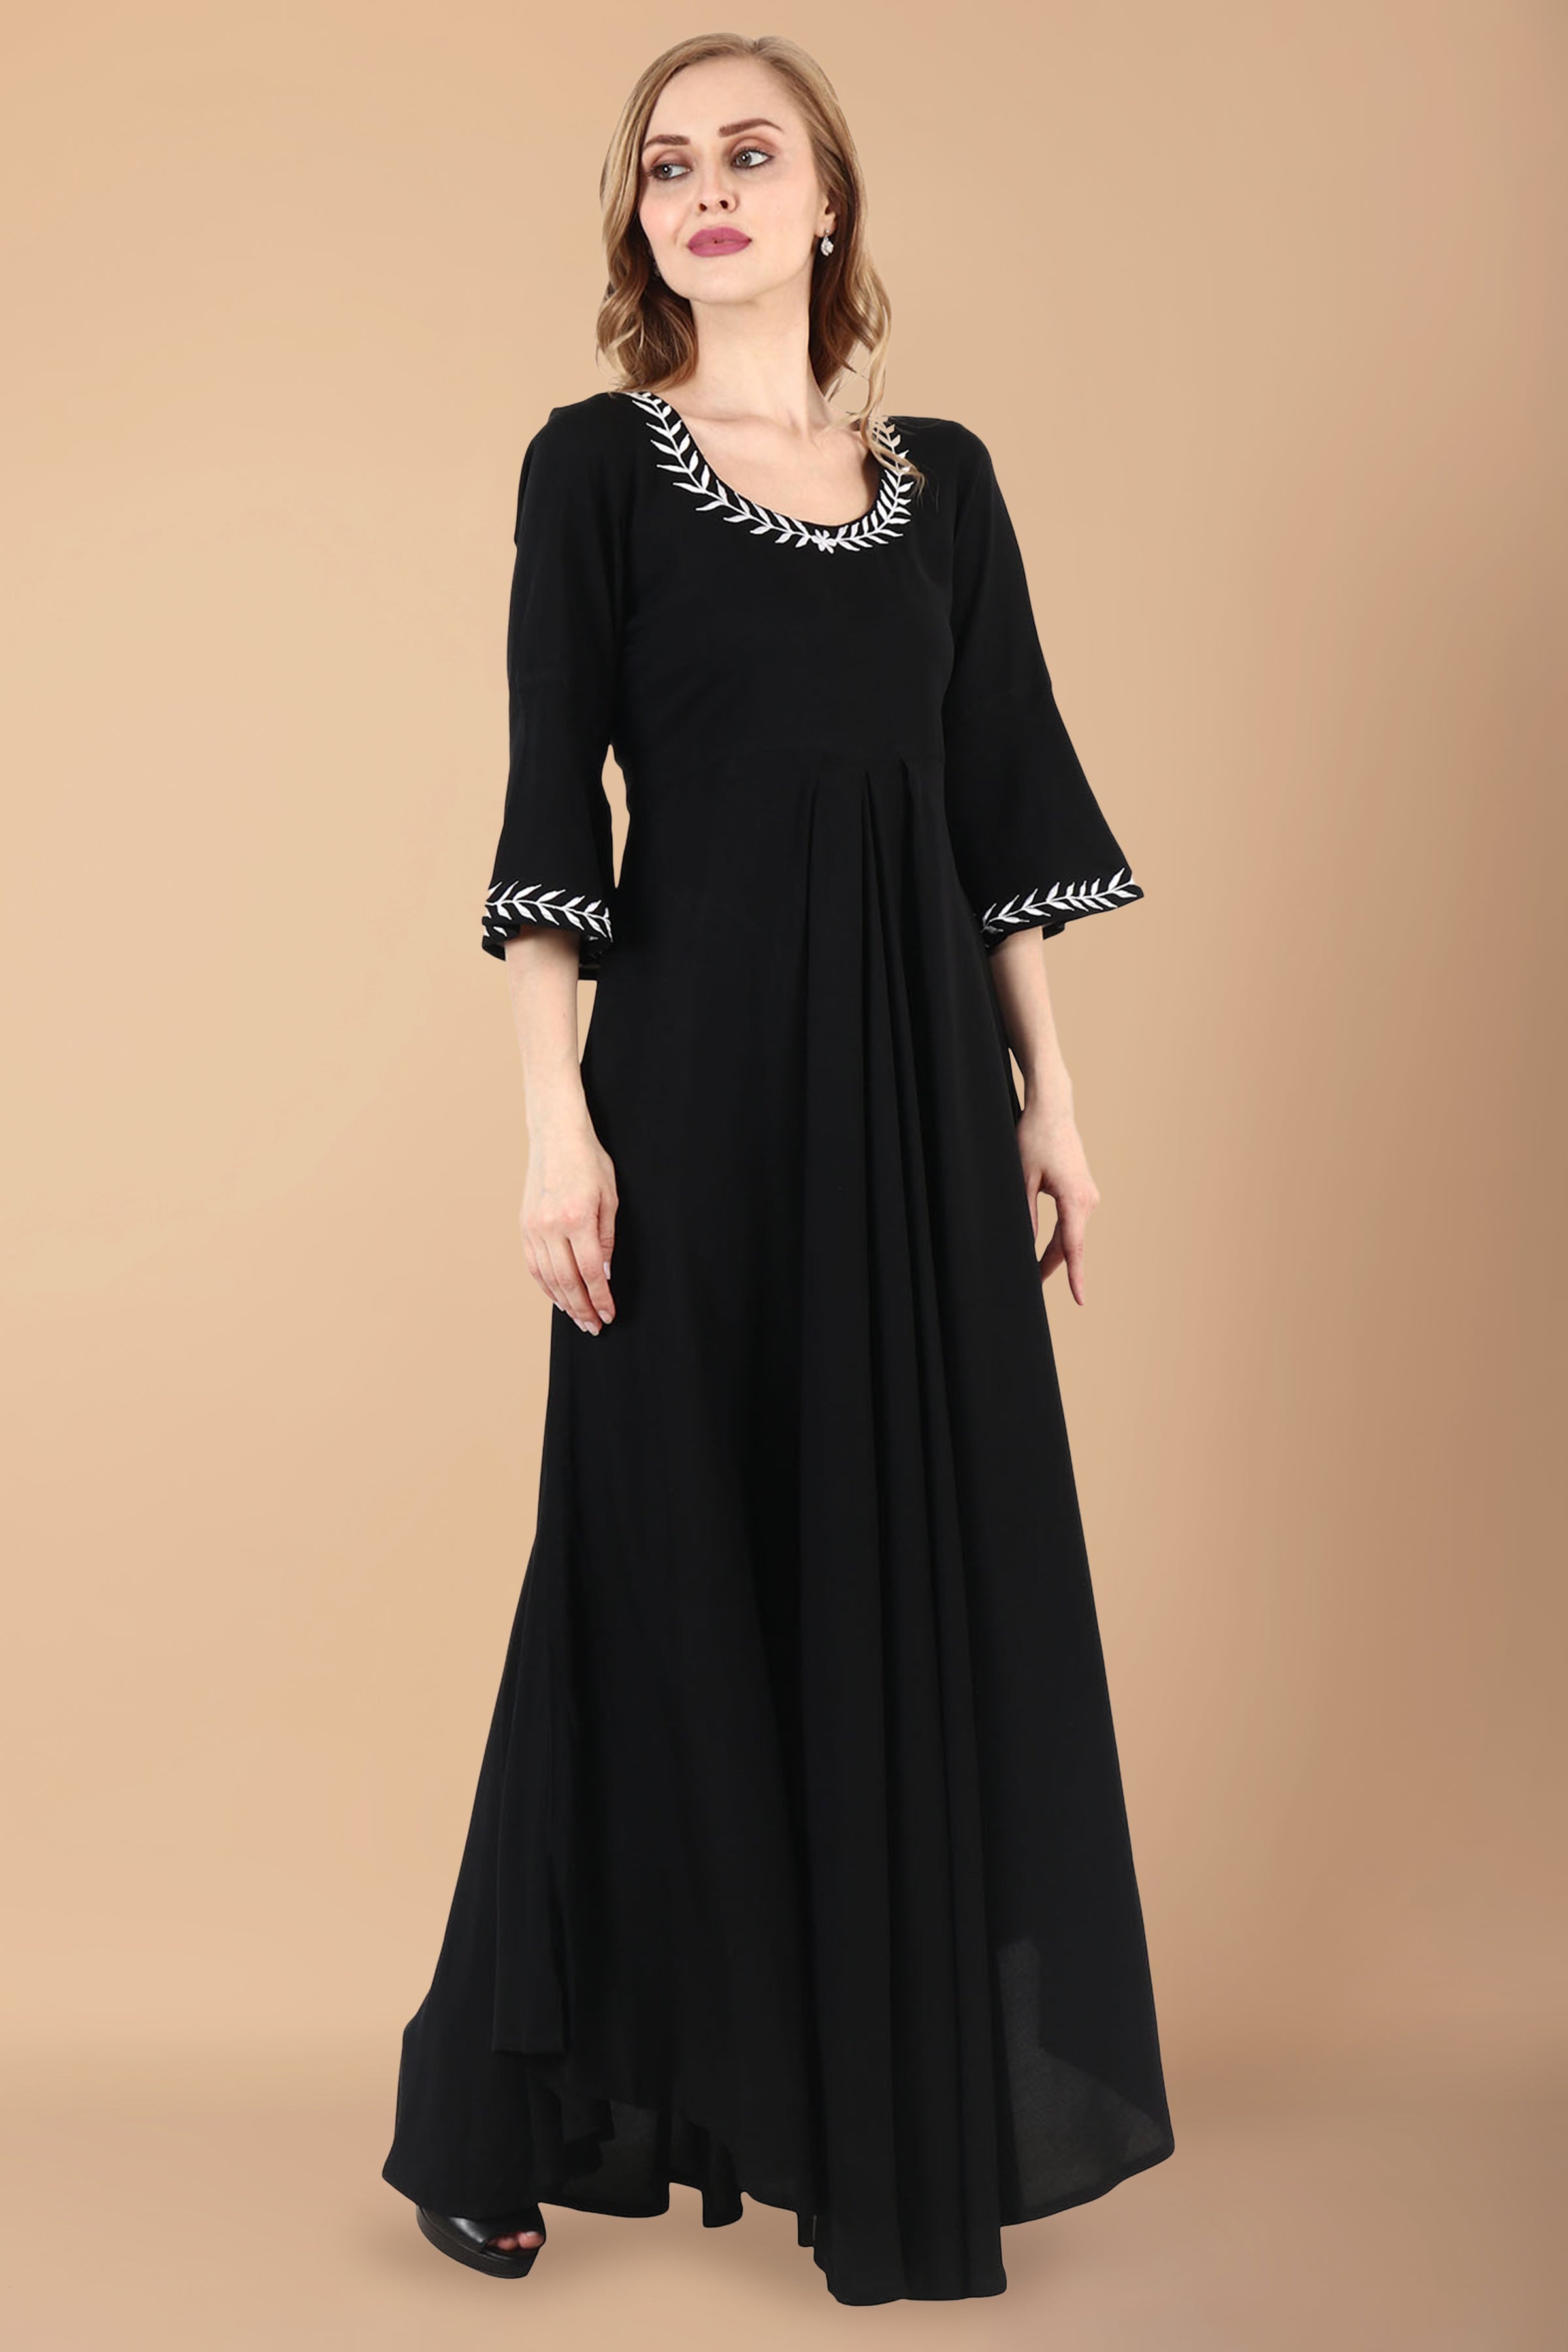 Gorgeous Black and White Part Wear Dress | Latest Kurti Designs